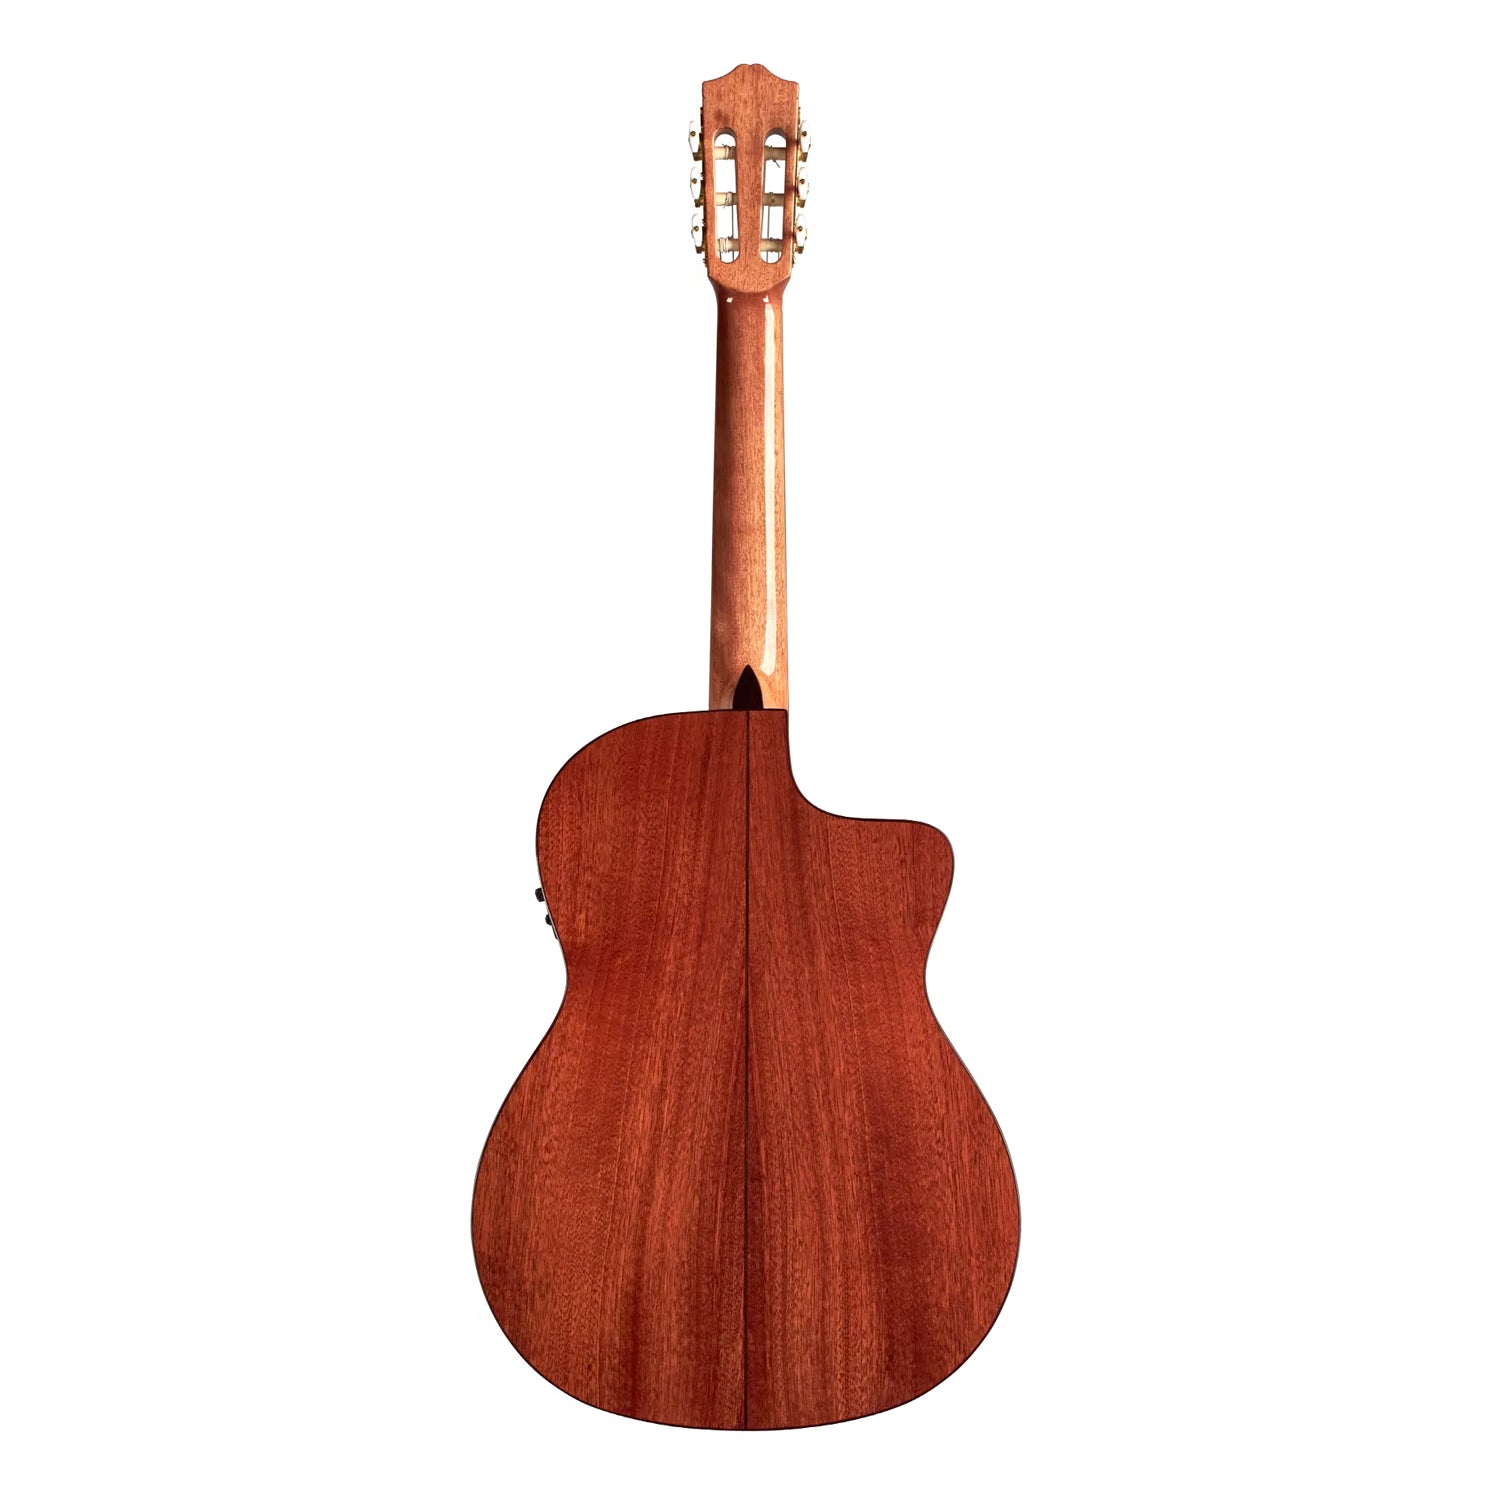 Córdoba C5-CE Cd Lefty Cutaway Acoustic-Electric Nylon String Guitar - Natural